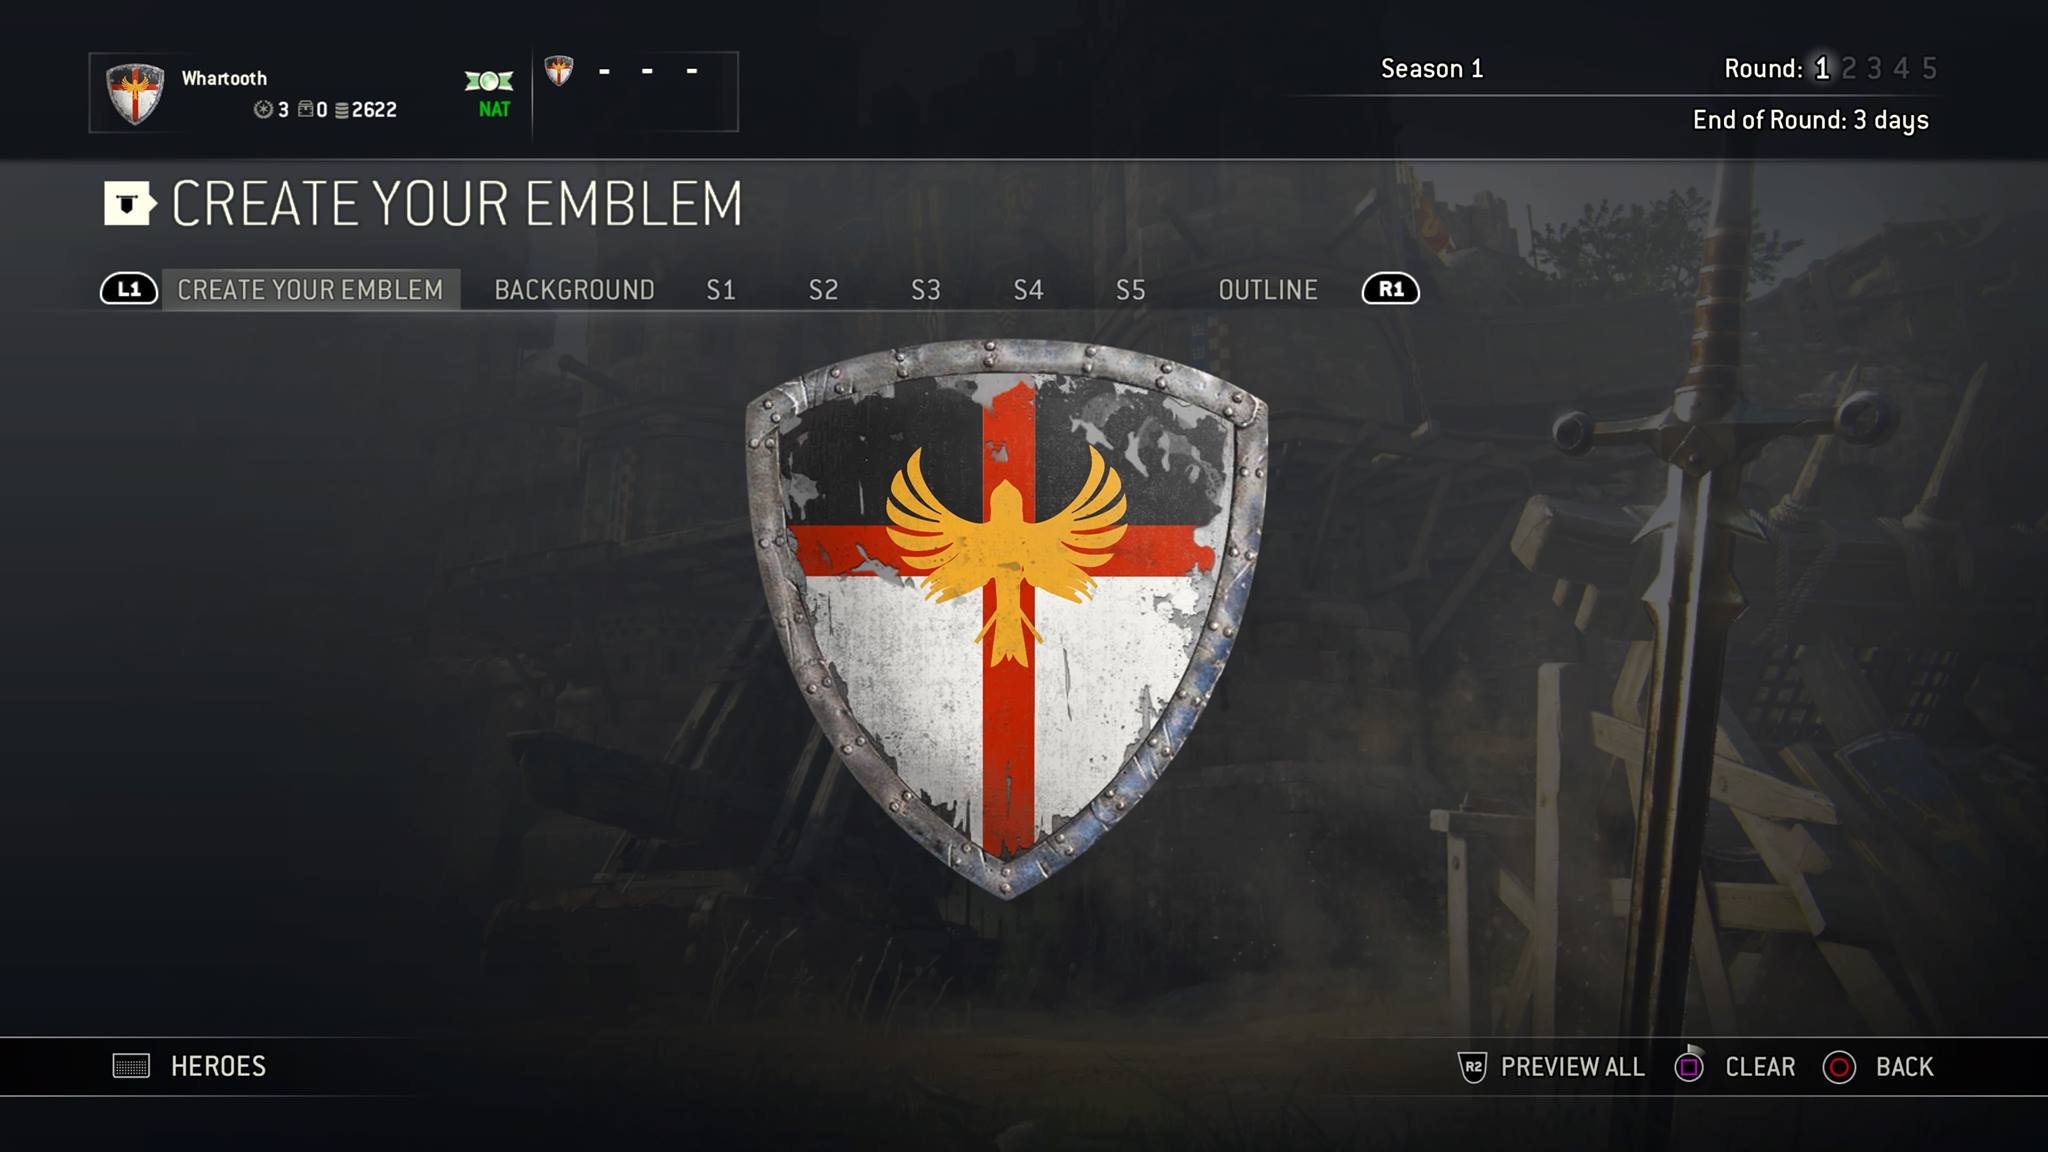 Crusader Cross Logo - I saw a crusader cross shield, figured I'd share the one I've been